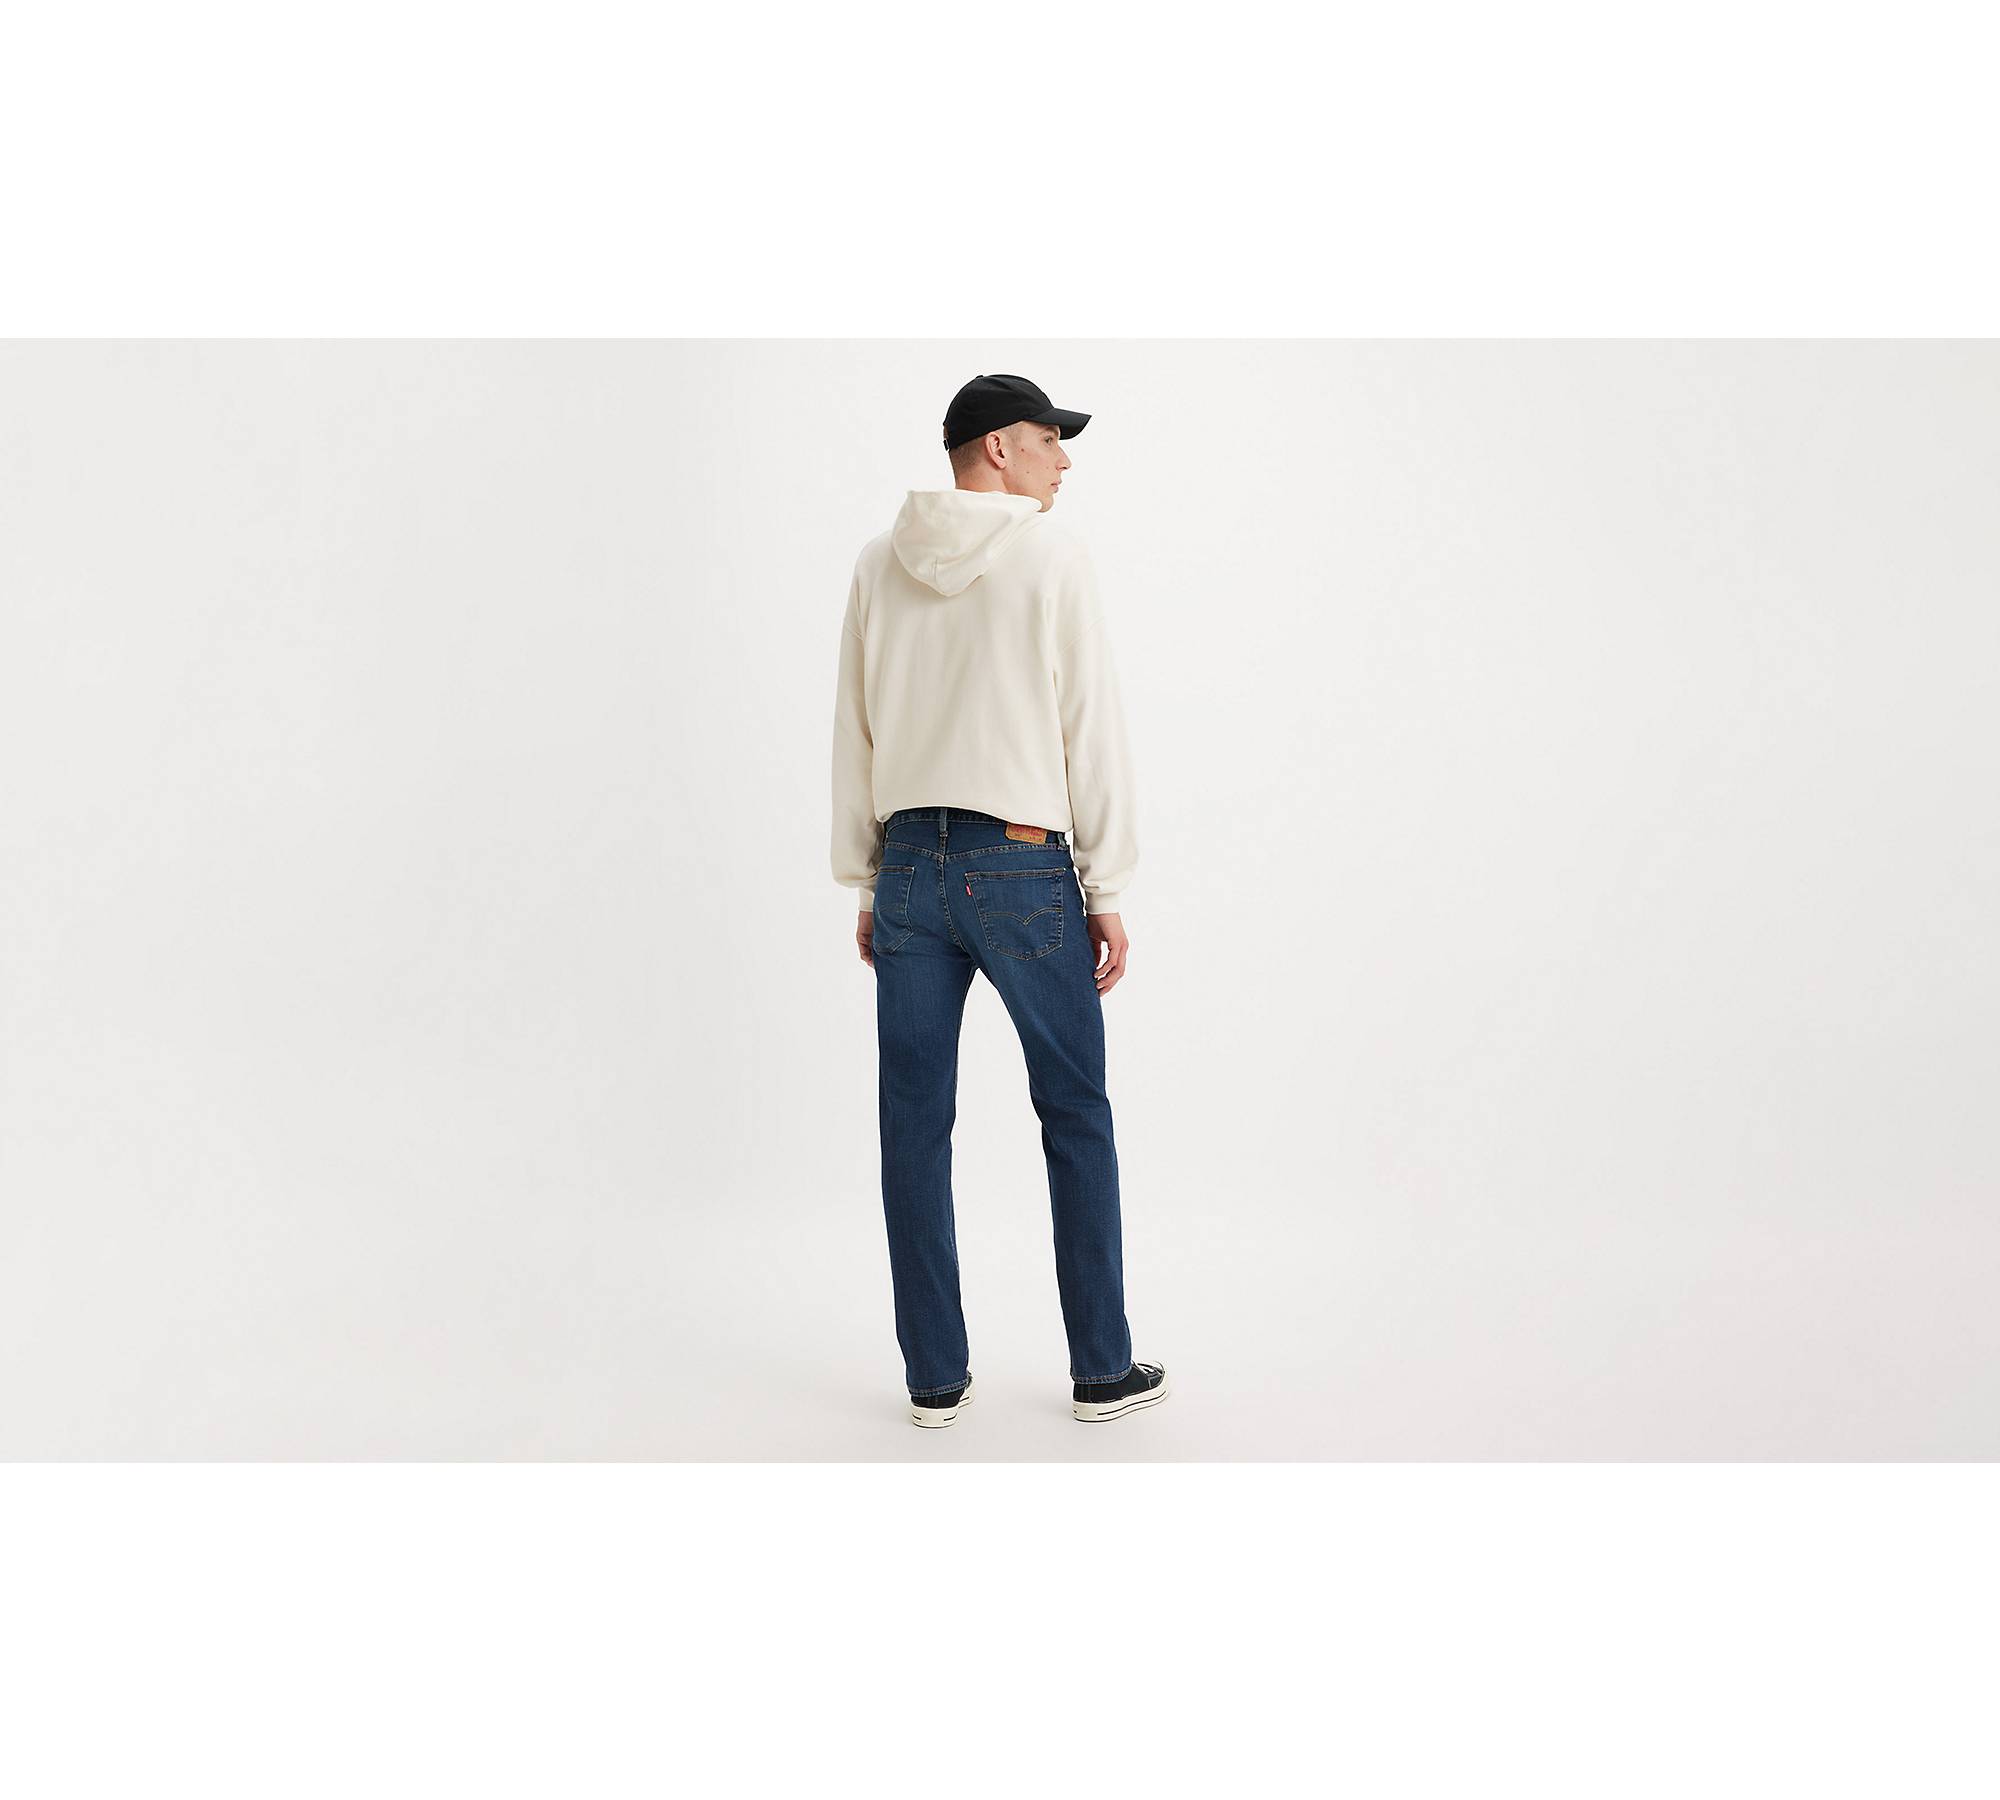 Levis 501 Original Jeans, Marlon Wash, Men's – Urban Industry